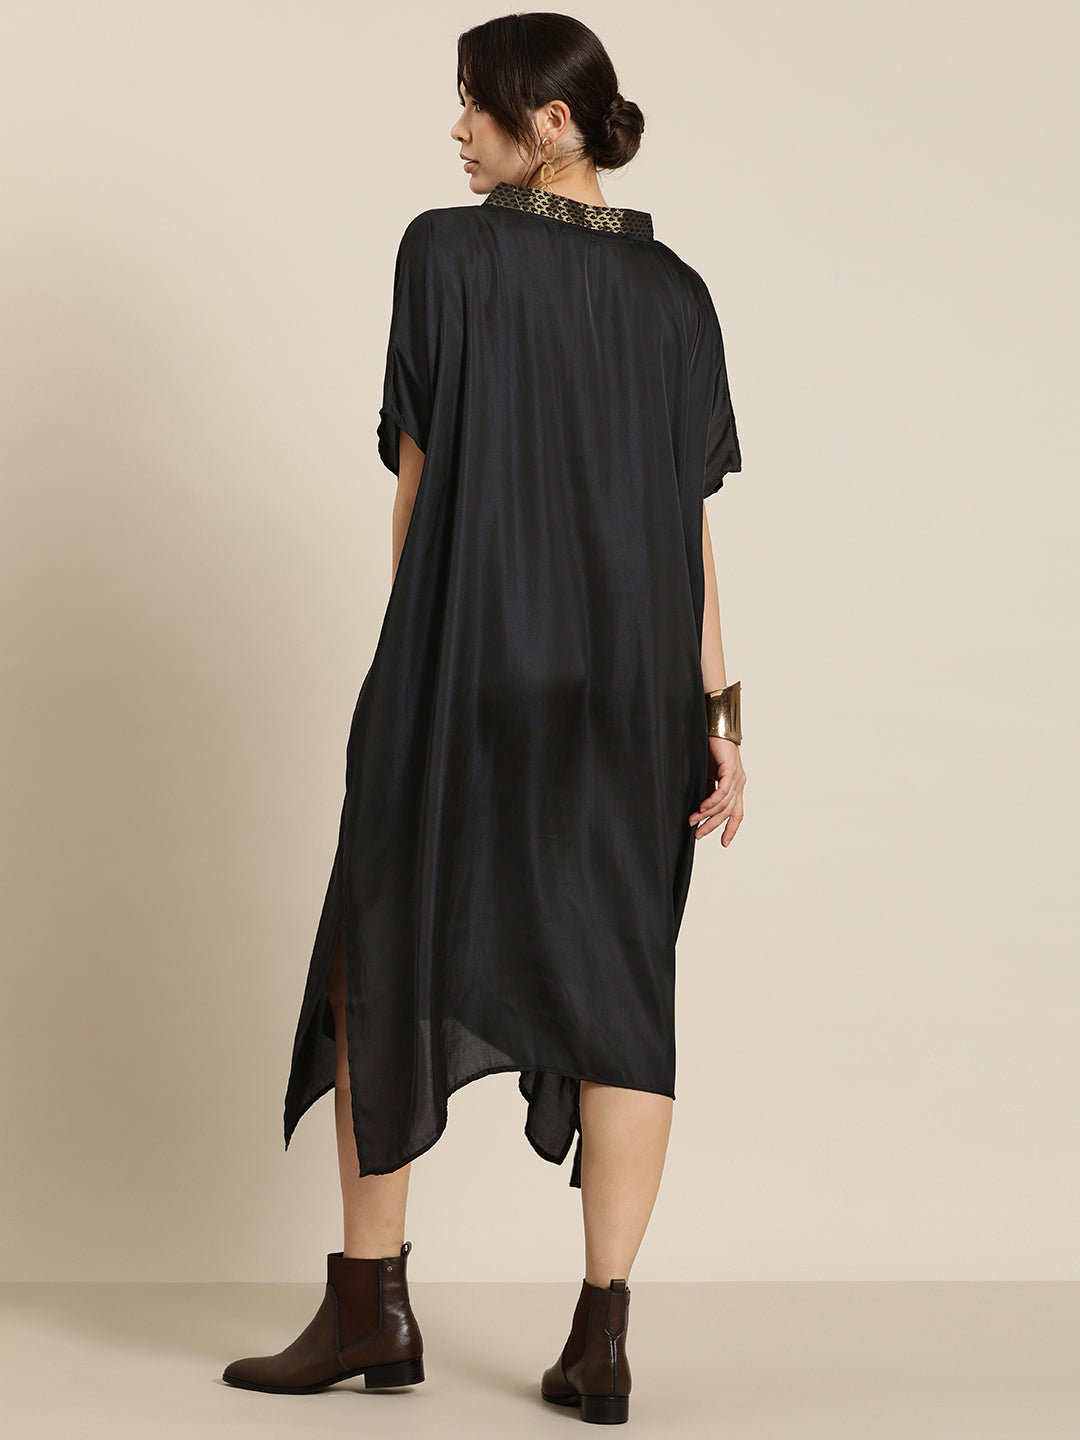 Black silk Kimono dress with brocade